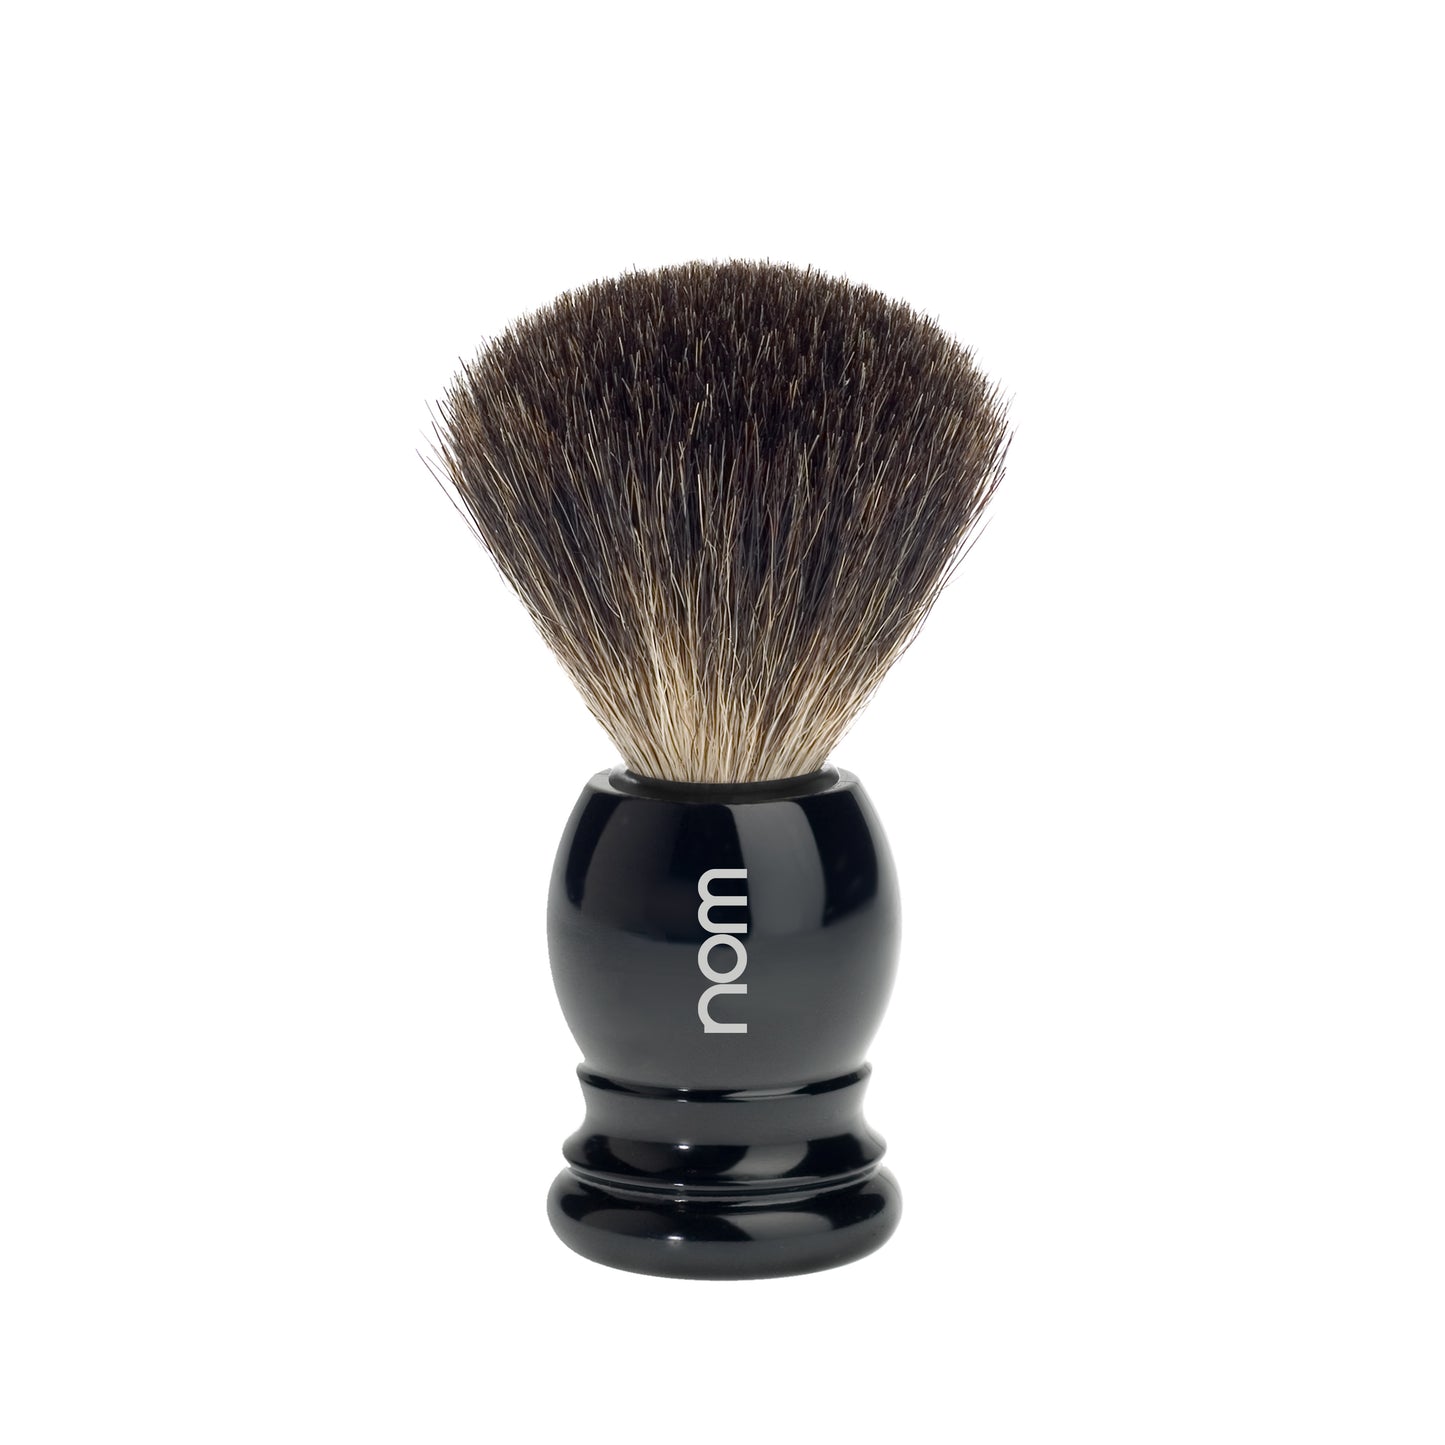 Muhle Pure badger brush. Handle made of black plastic  21mm